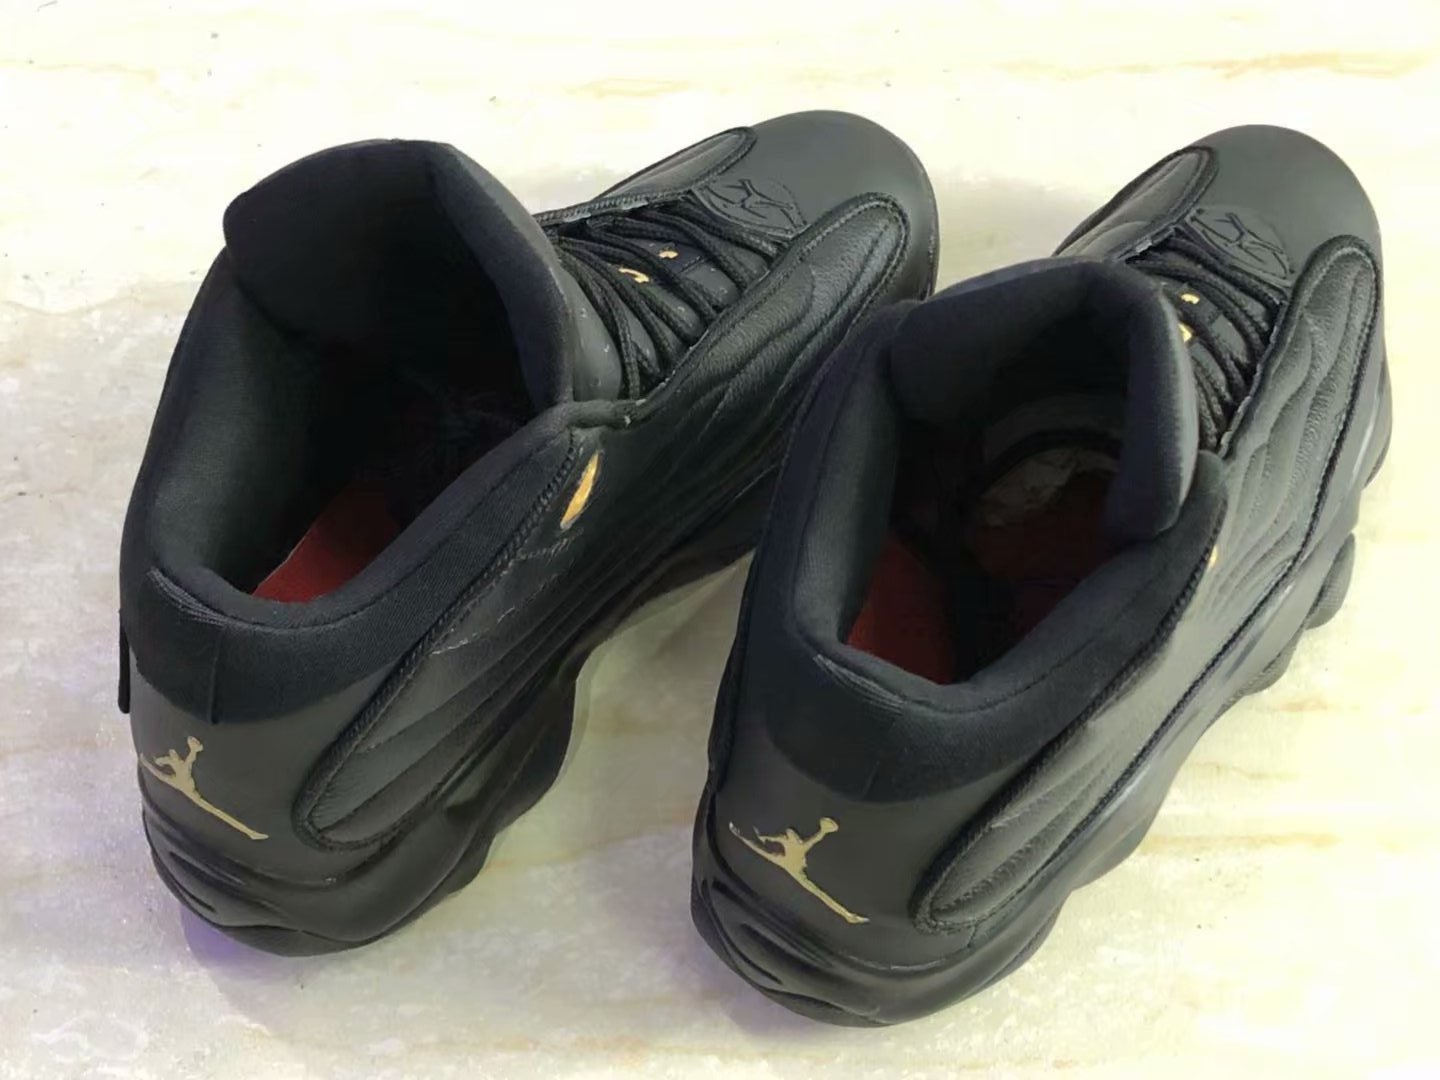 New Air Jordan 13.5 All Black Shoes